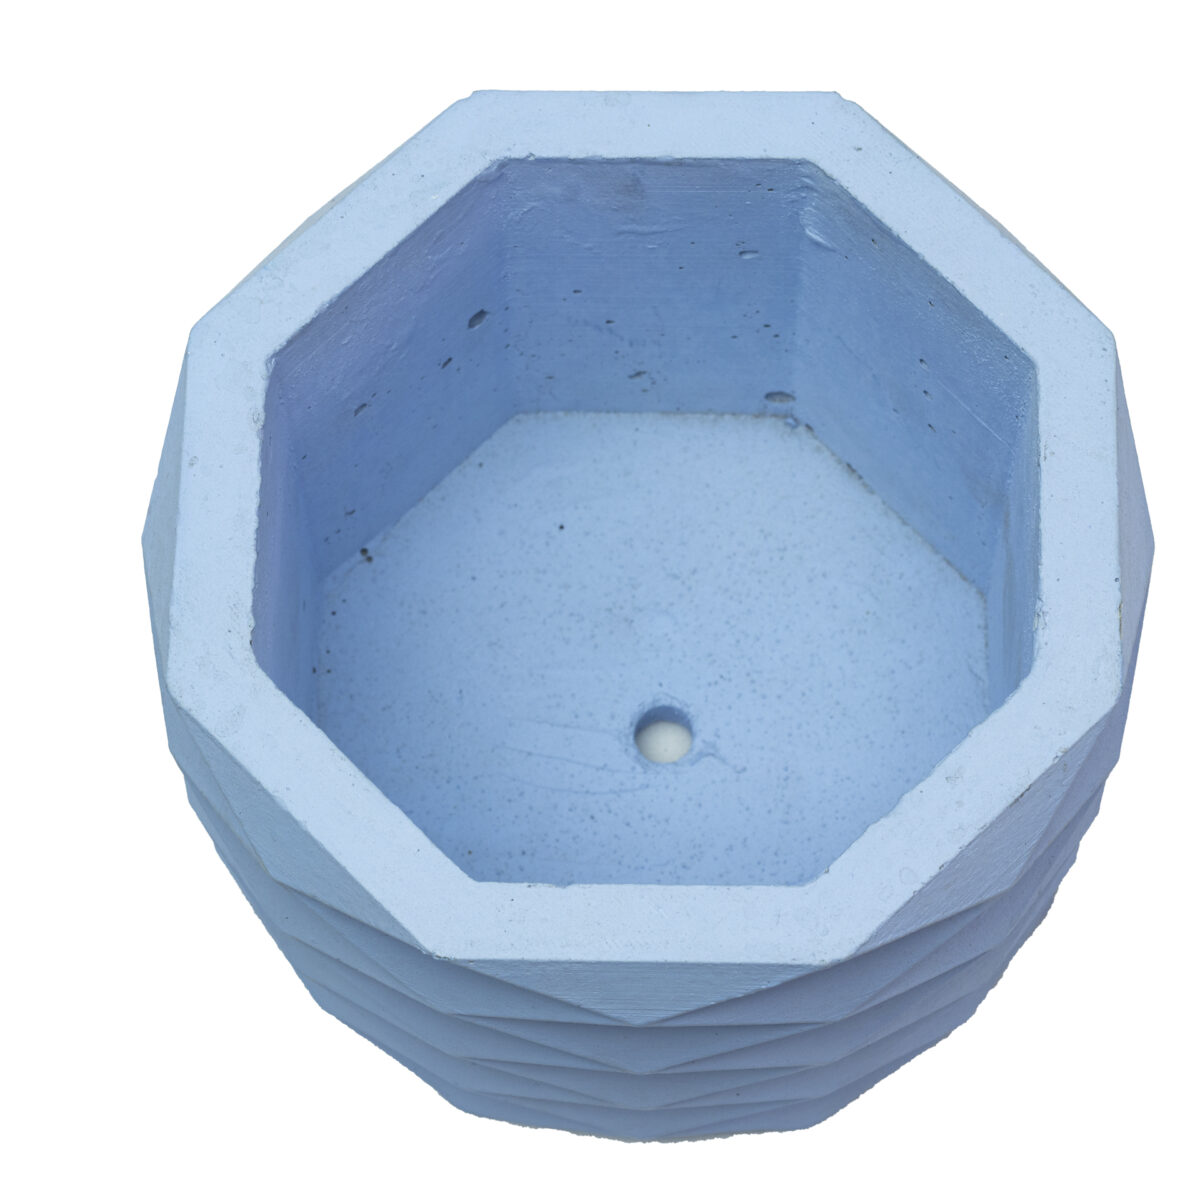 Sky Hexagon Cement Concrete Pot